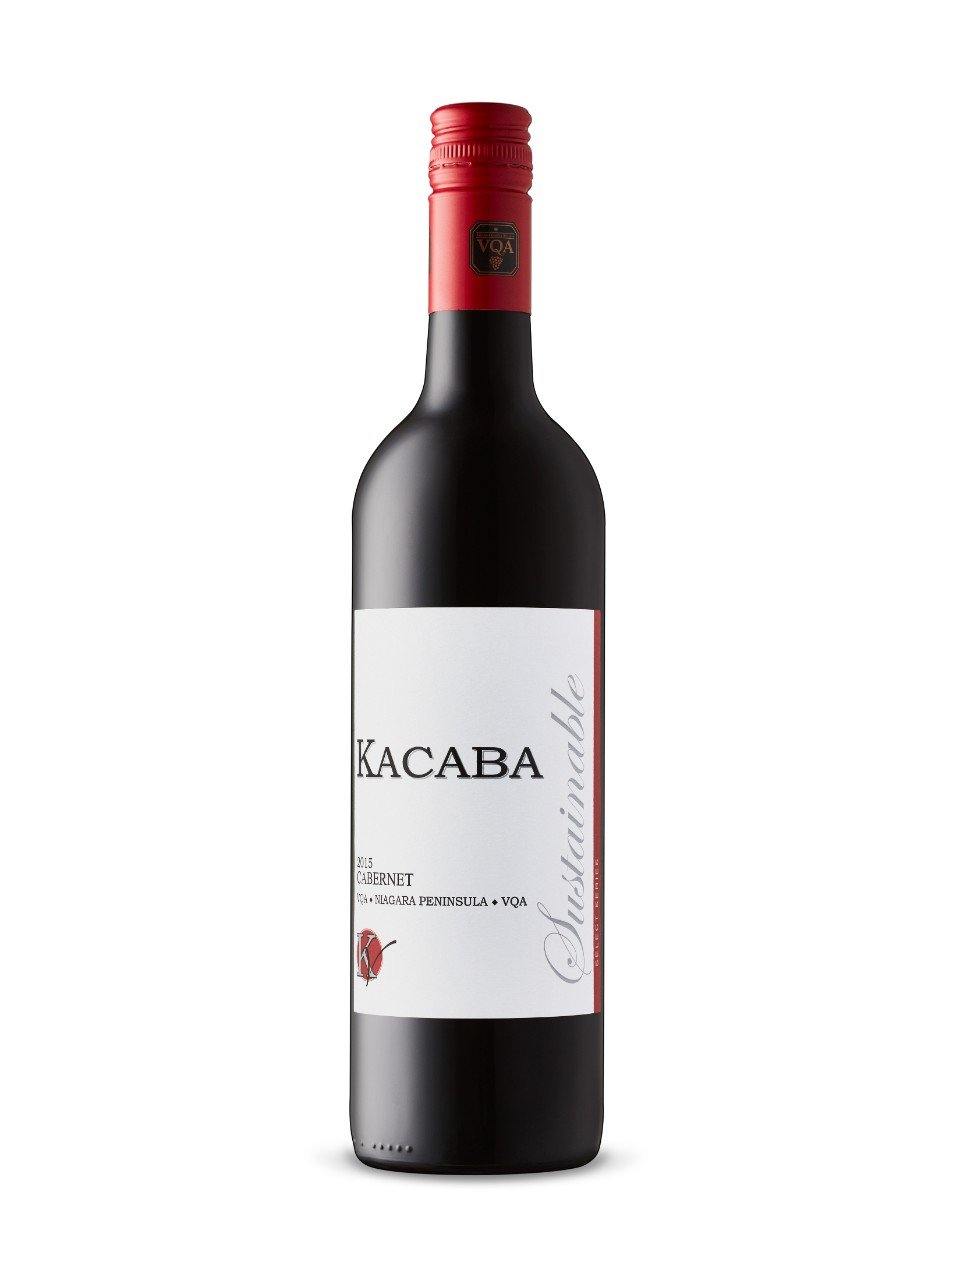 Kacaba Cabernet VQA Named Varietal Blends-Red  750 mL bottle - Speedy Booze